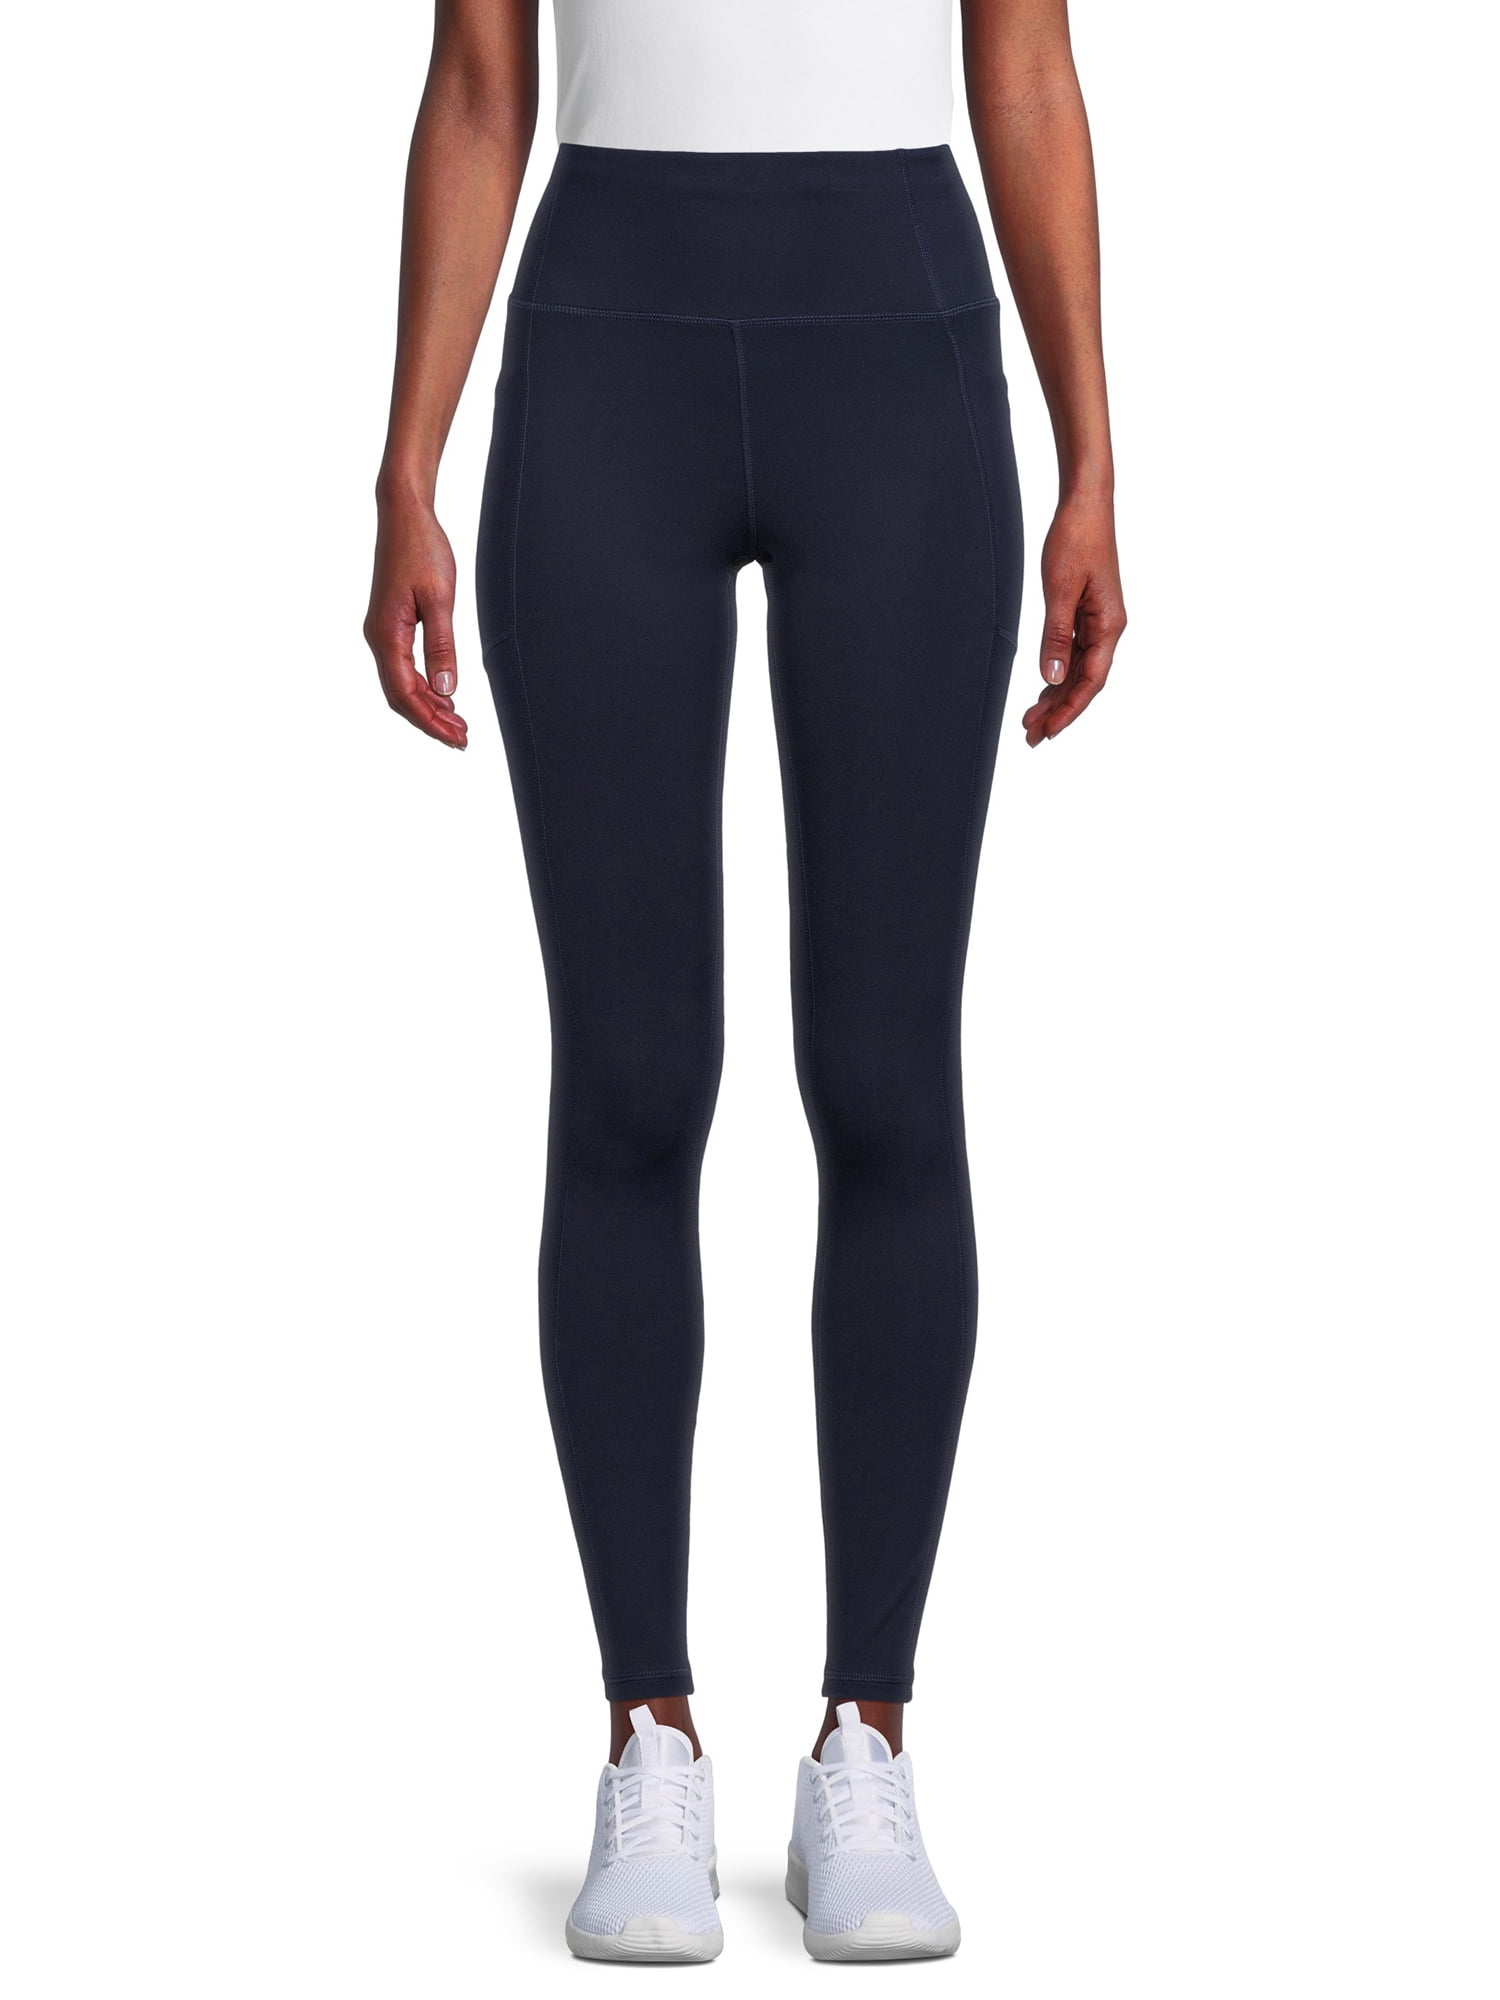 Avia, Pants & Jumpsuits, Avia Activewear Womens With Side Zipper Pockets